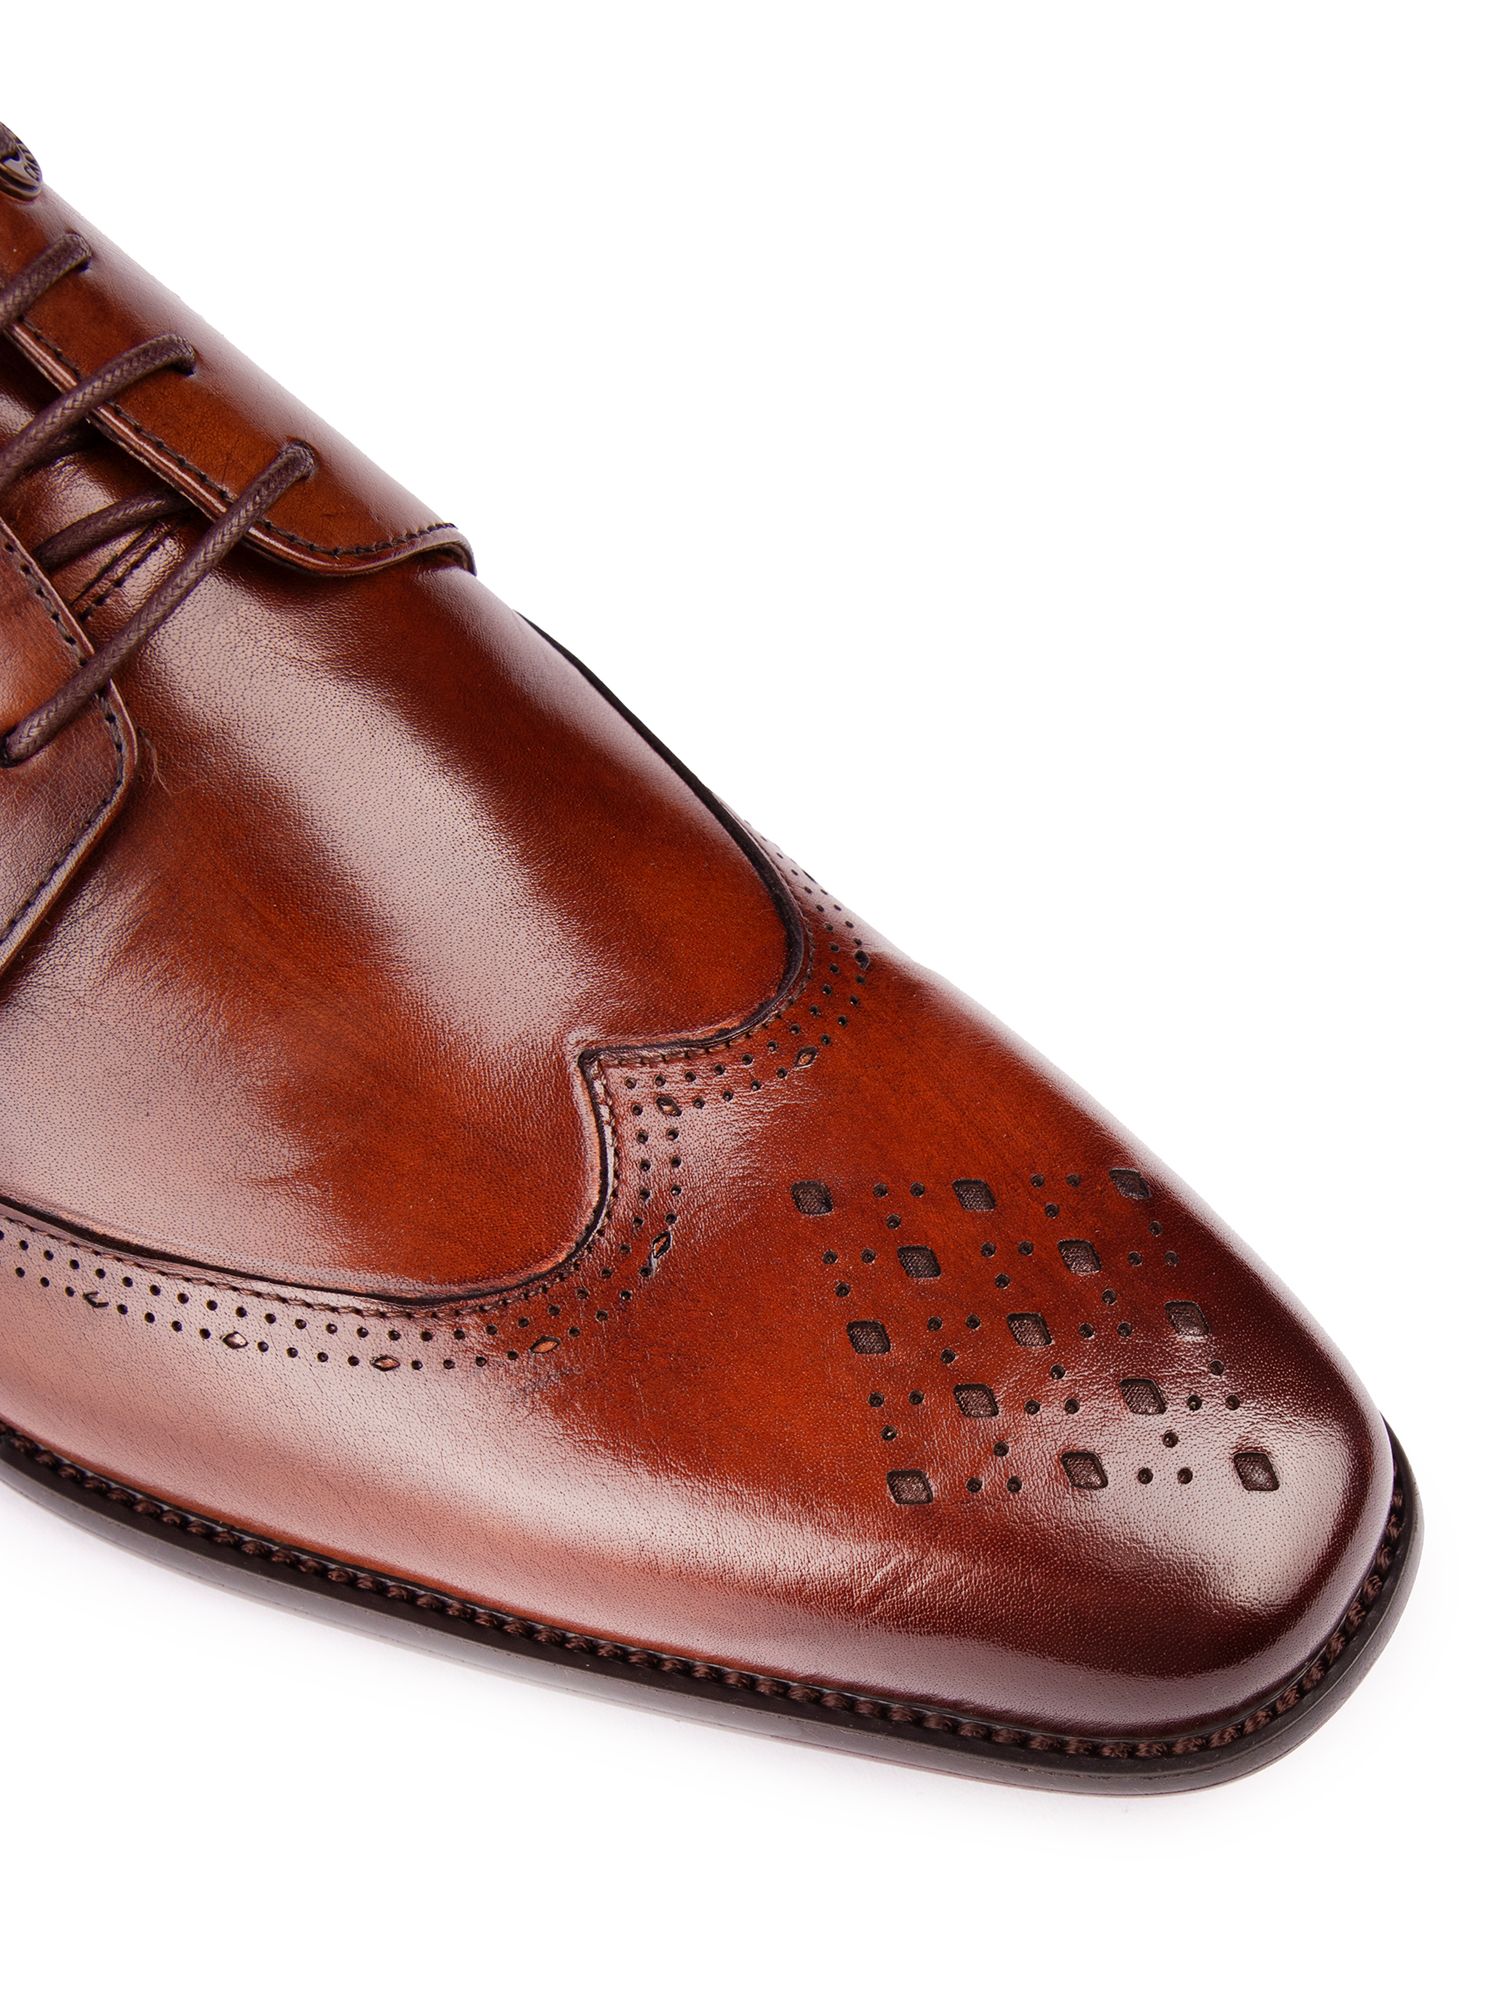 Simon Carter Burrow Leather Brogue Shoes, Tan, 7